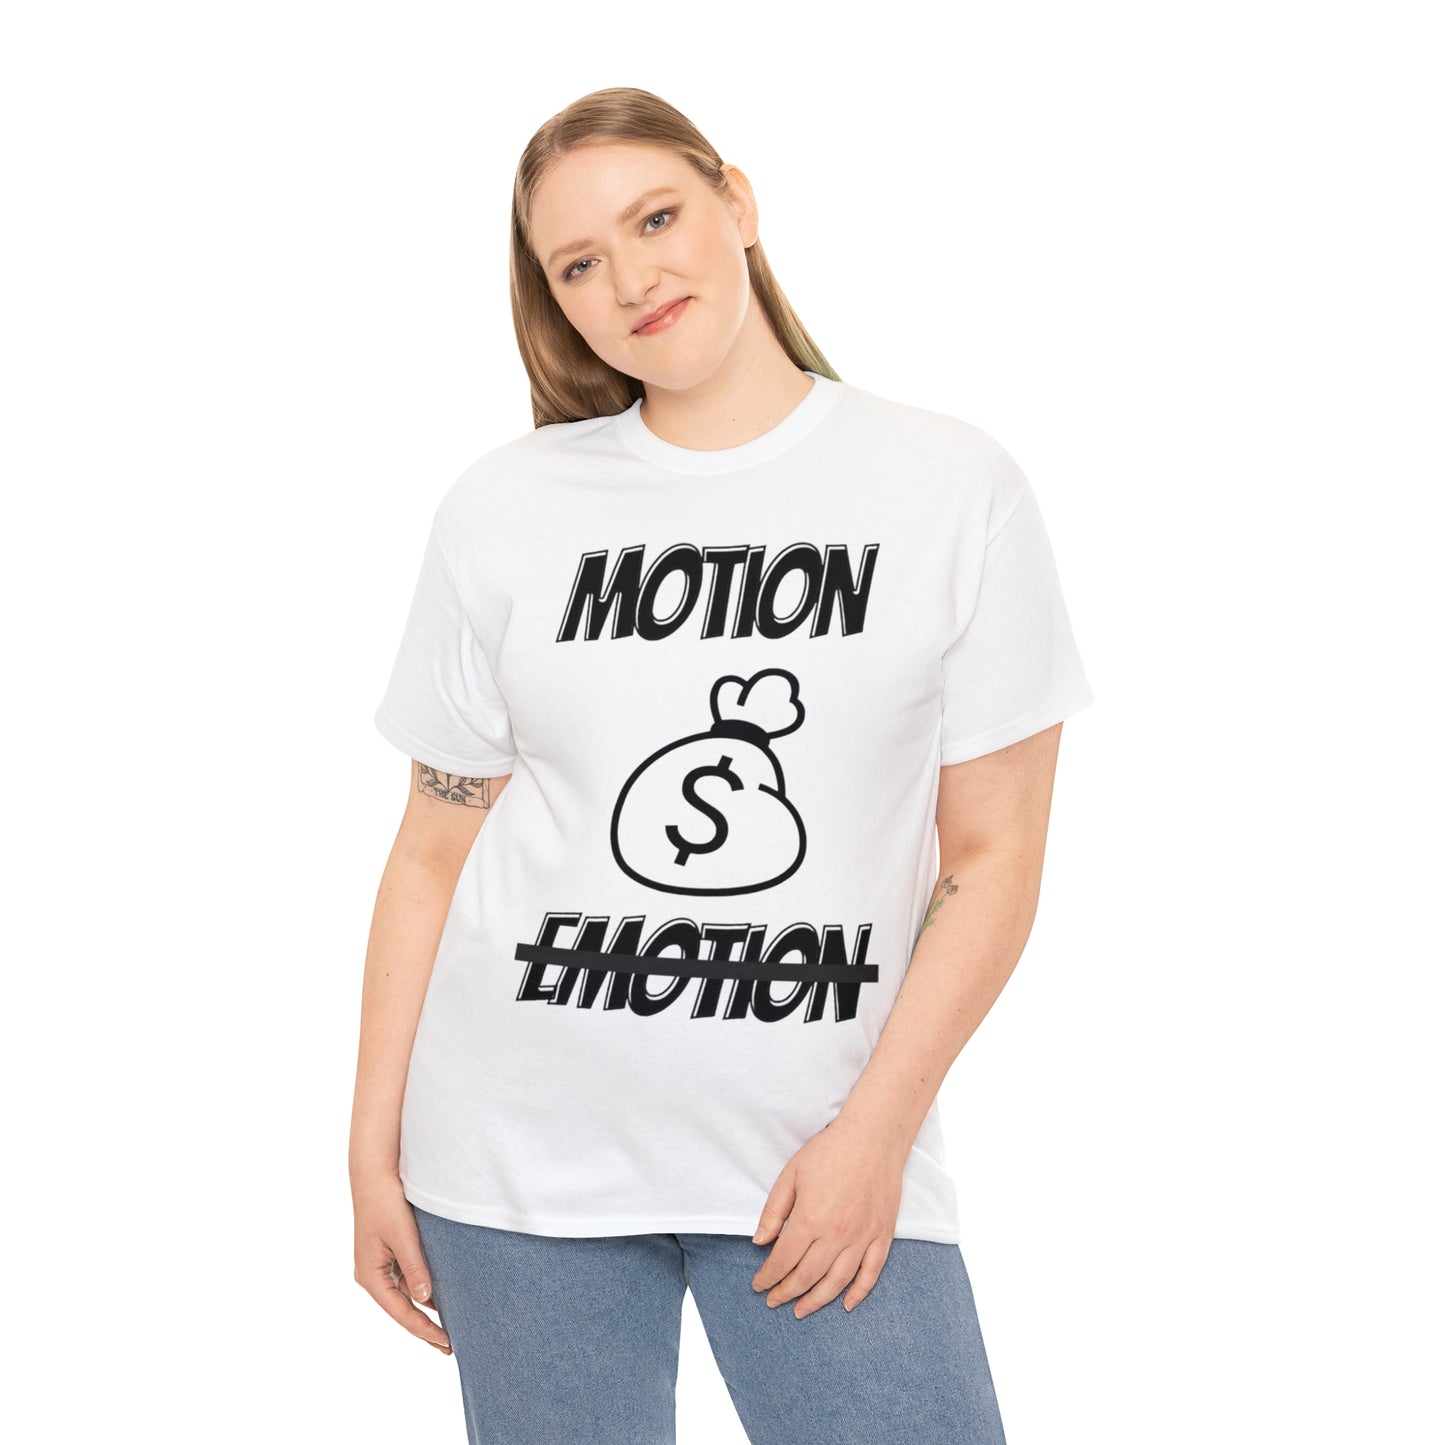 Motion No Emotion Tee